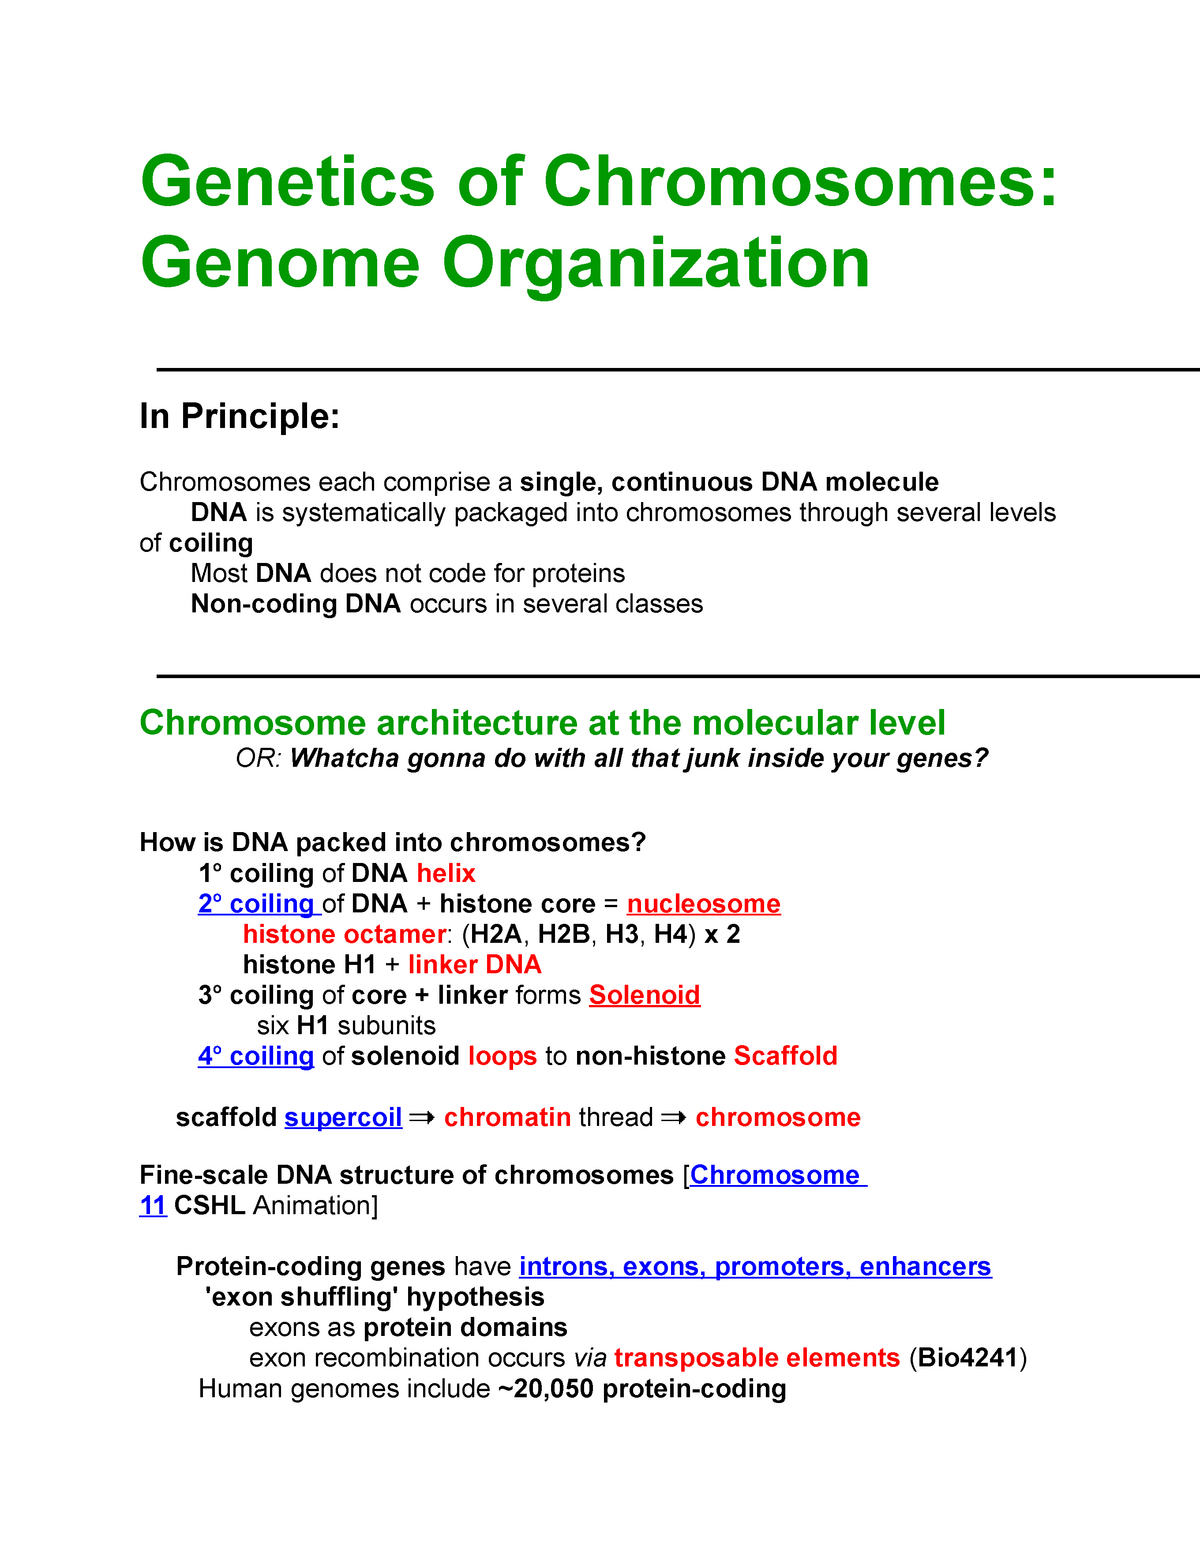 Genetics of Chromosomes - Genome Organization lecture notes 6 - Genetics of  Chromosomes: Genome - Studocu